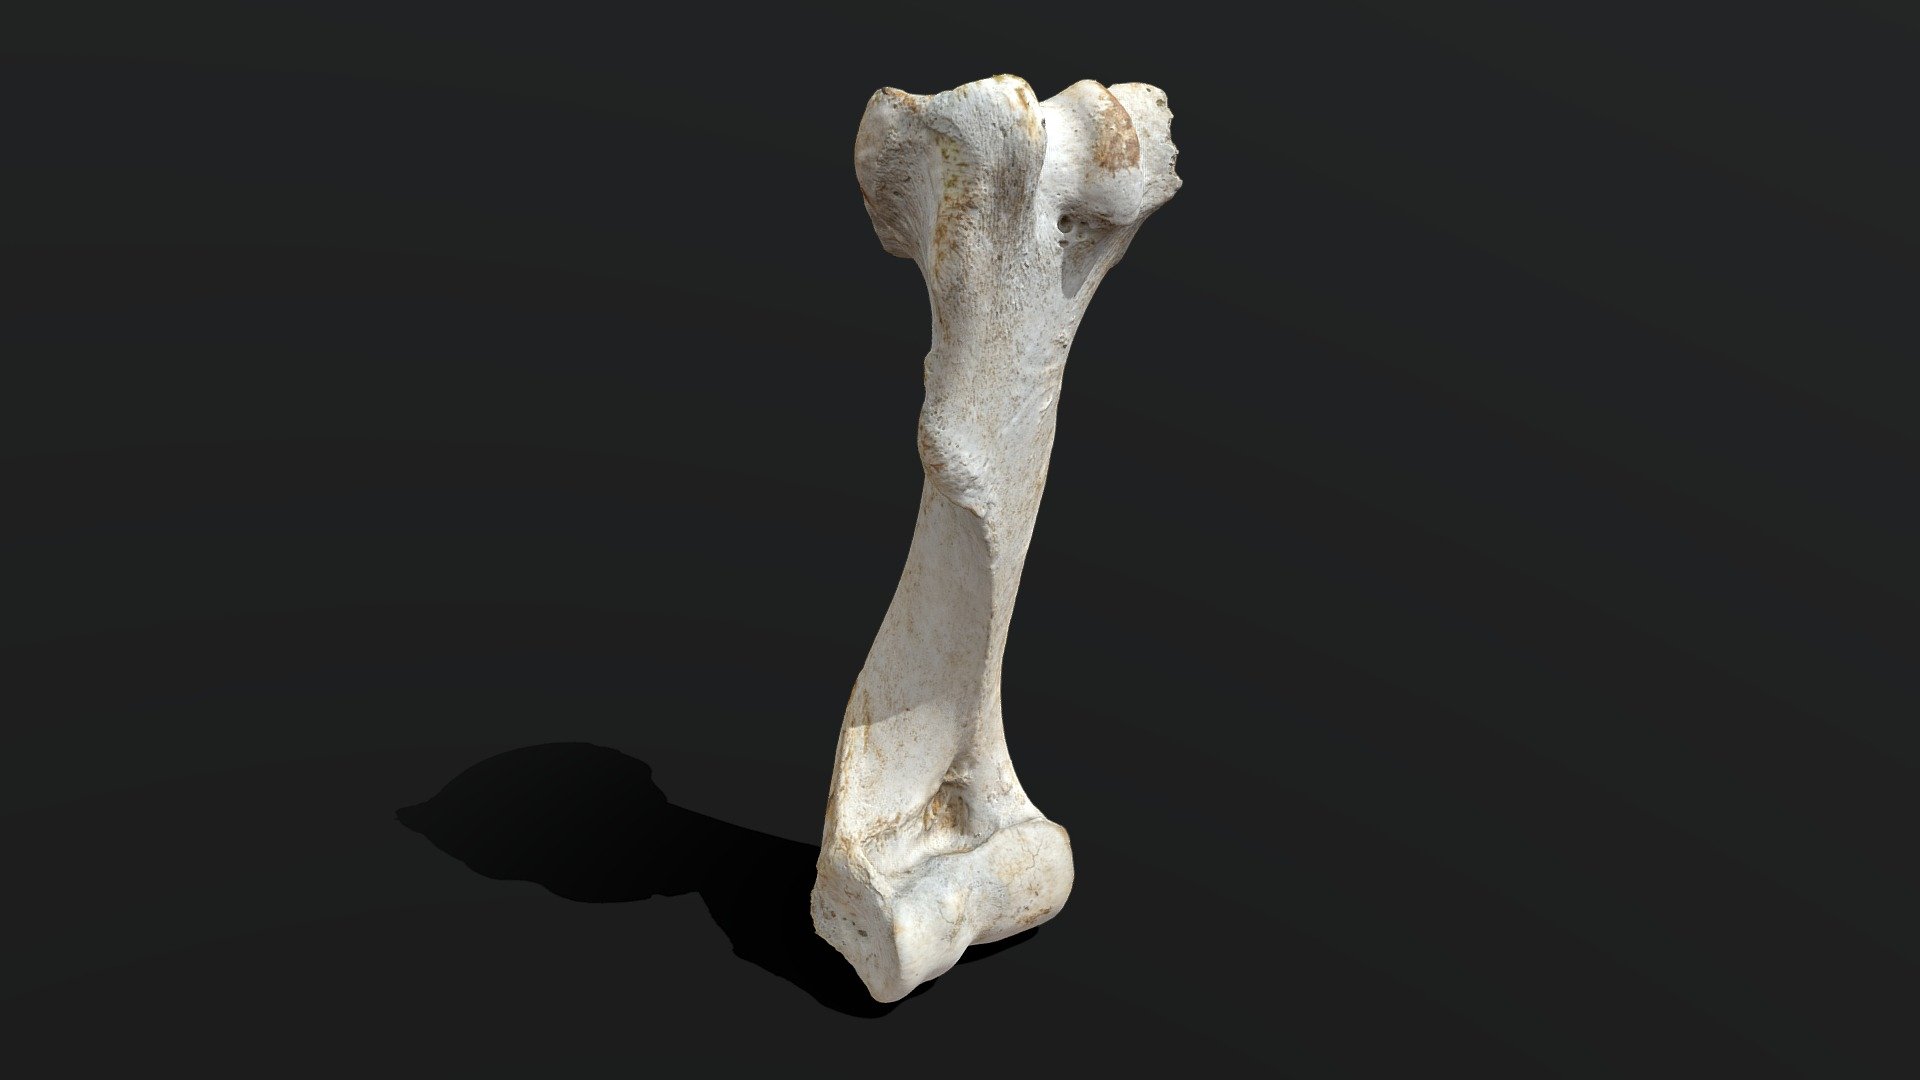 Cow Bone .::RAWscan::.

3Dscan by photogrammetry - Cow Bone .::RAWscan:: 3d model